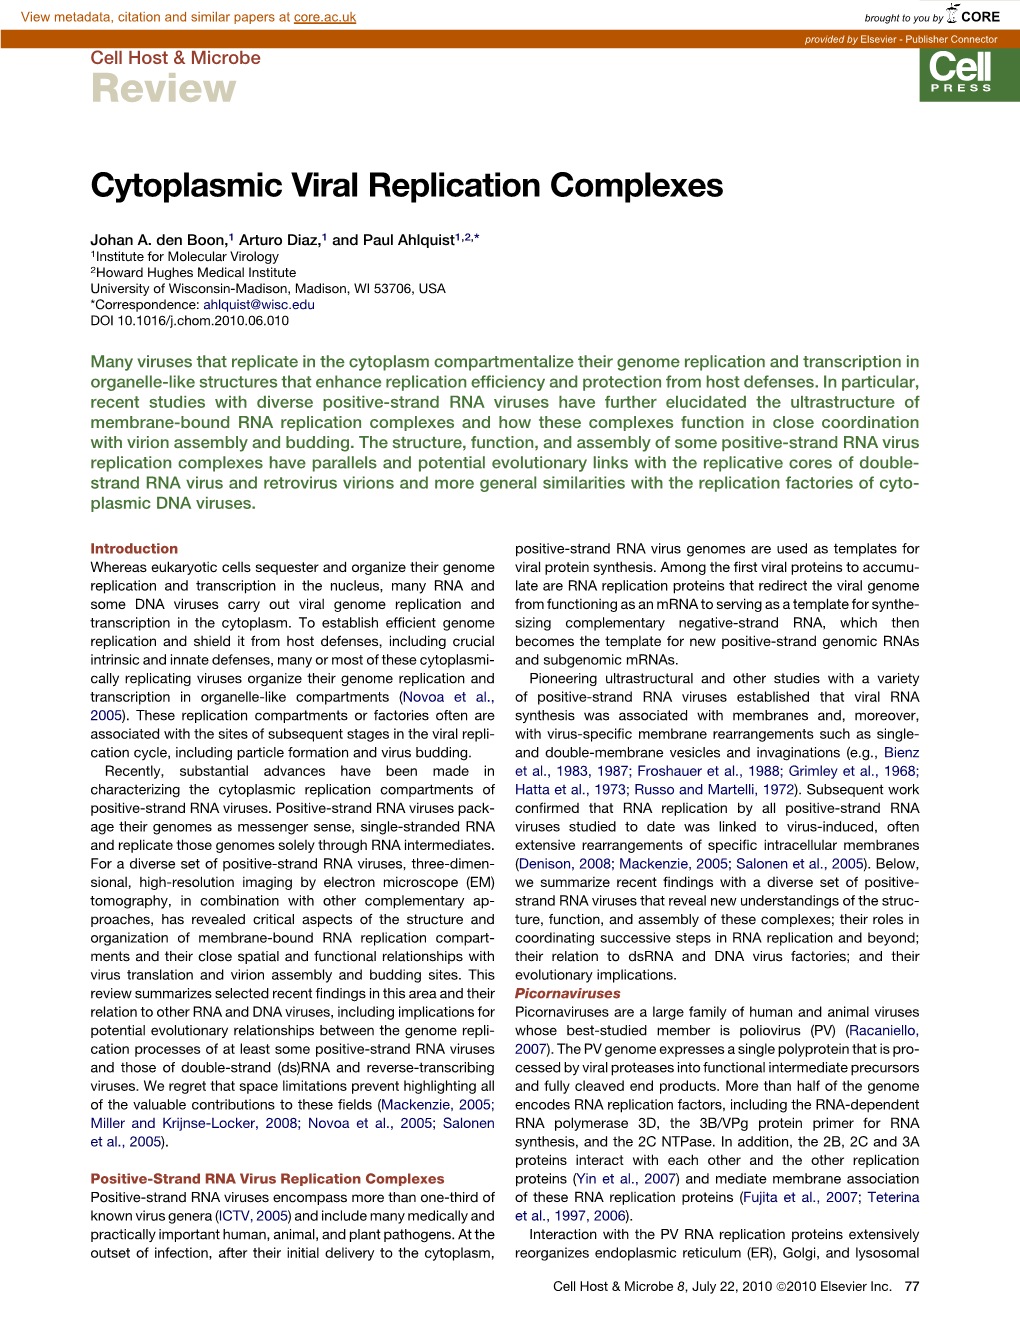 Cytoplasmic Viral Replication Complexes